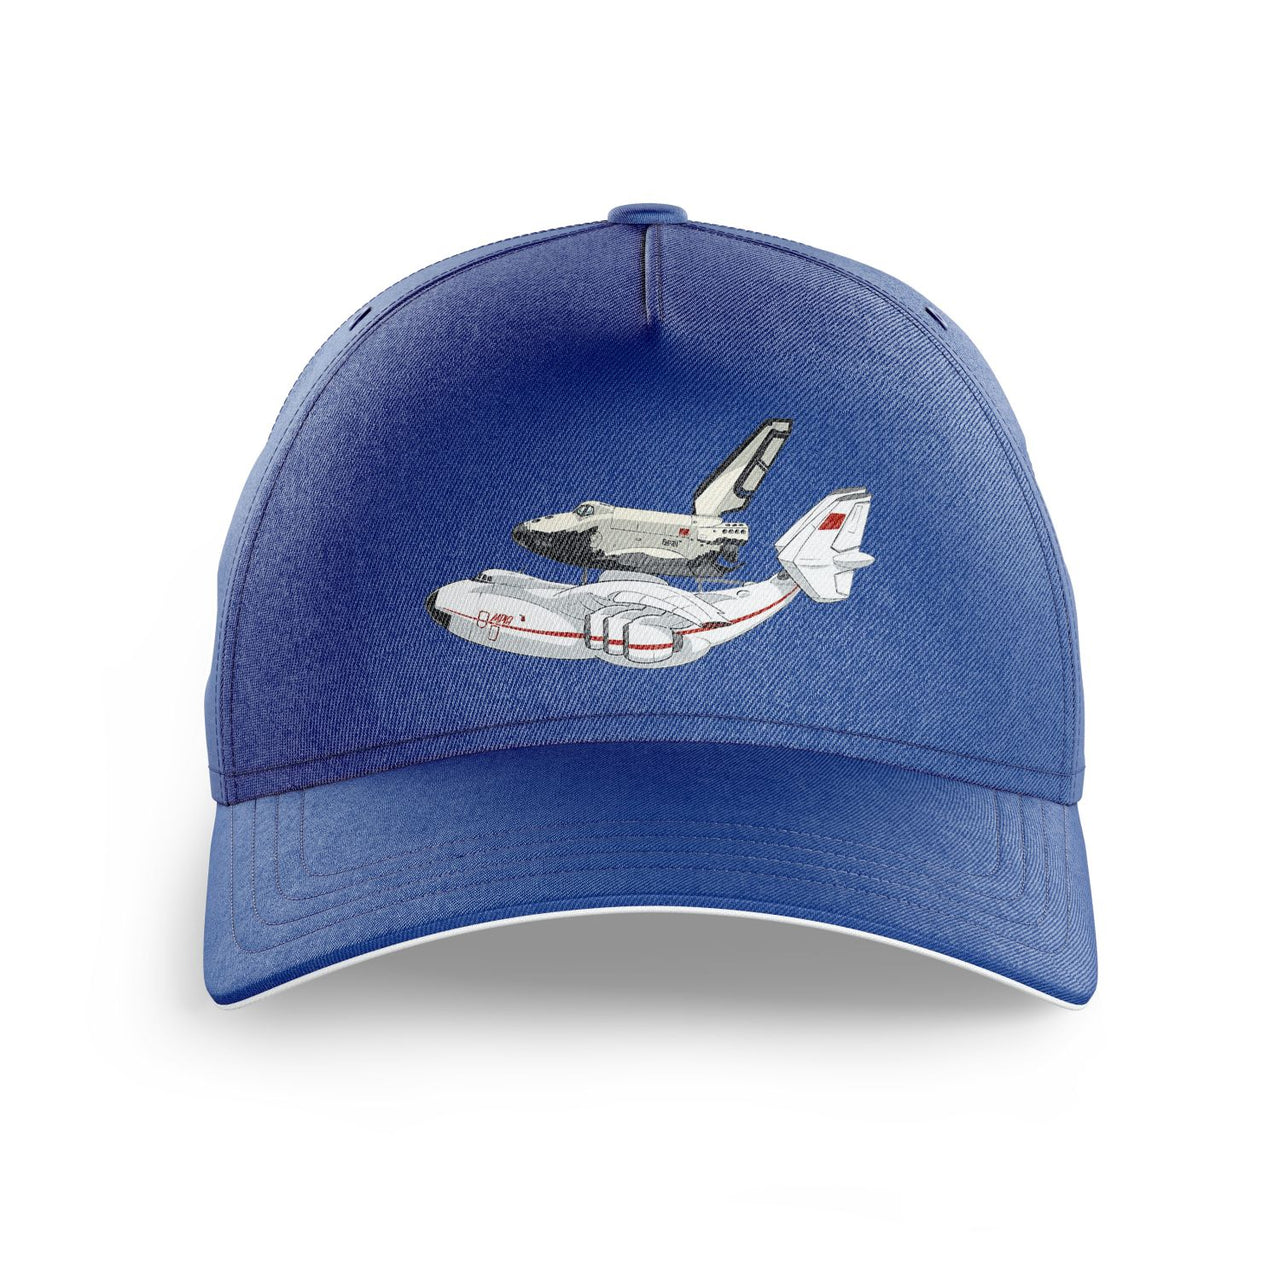 Buran & An-225 Printed Hats